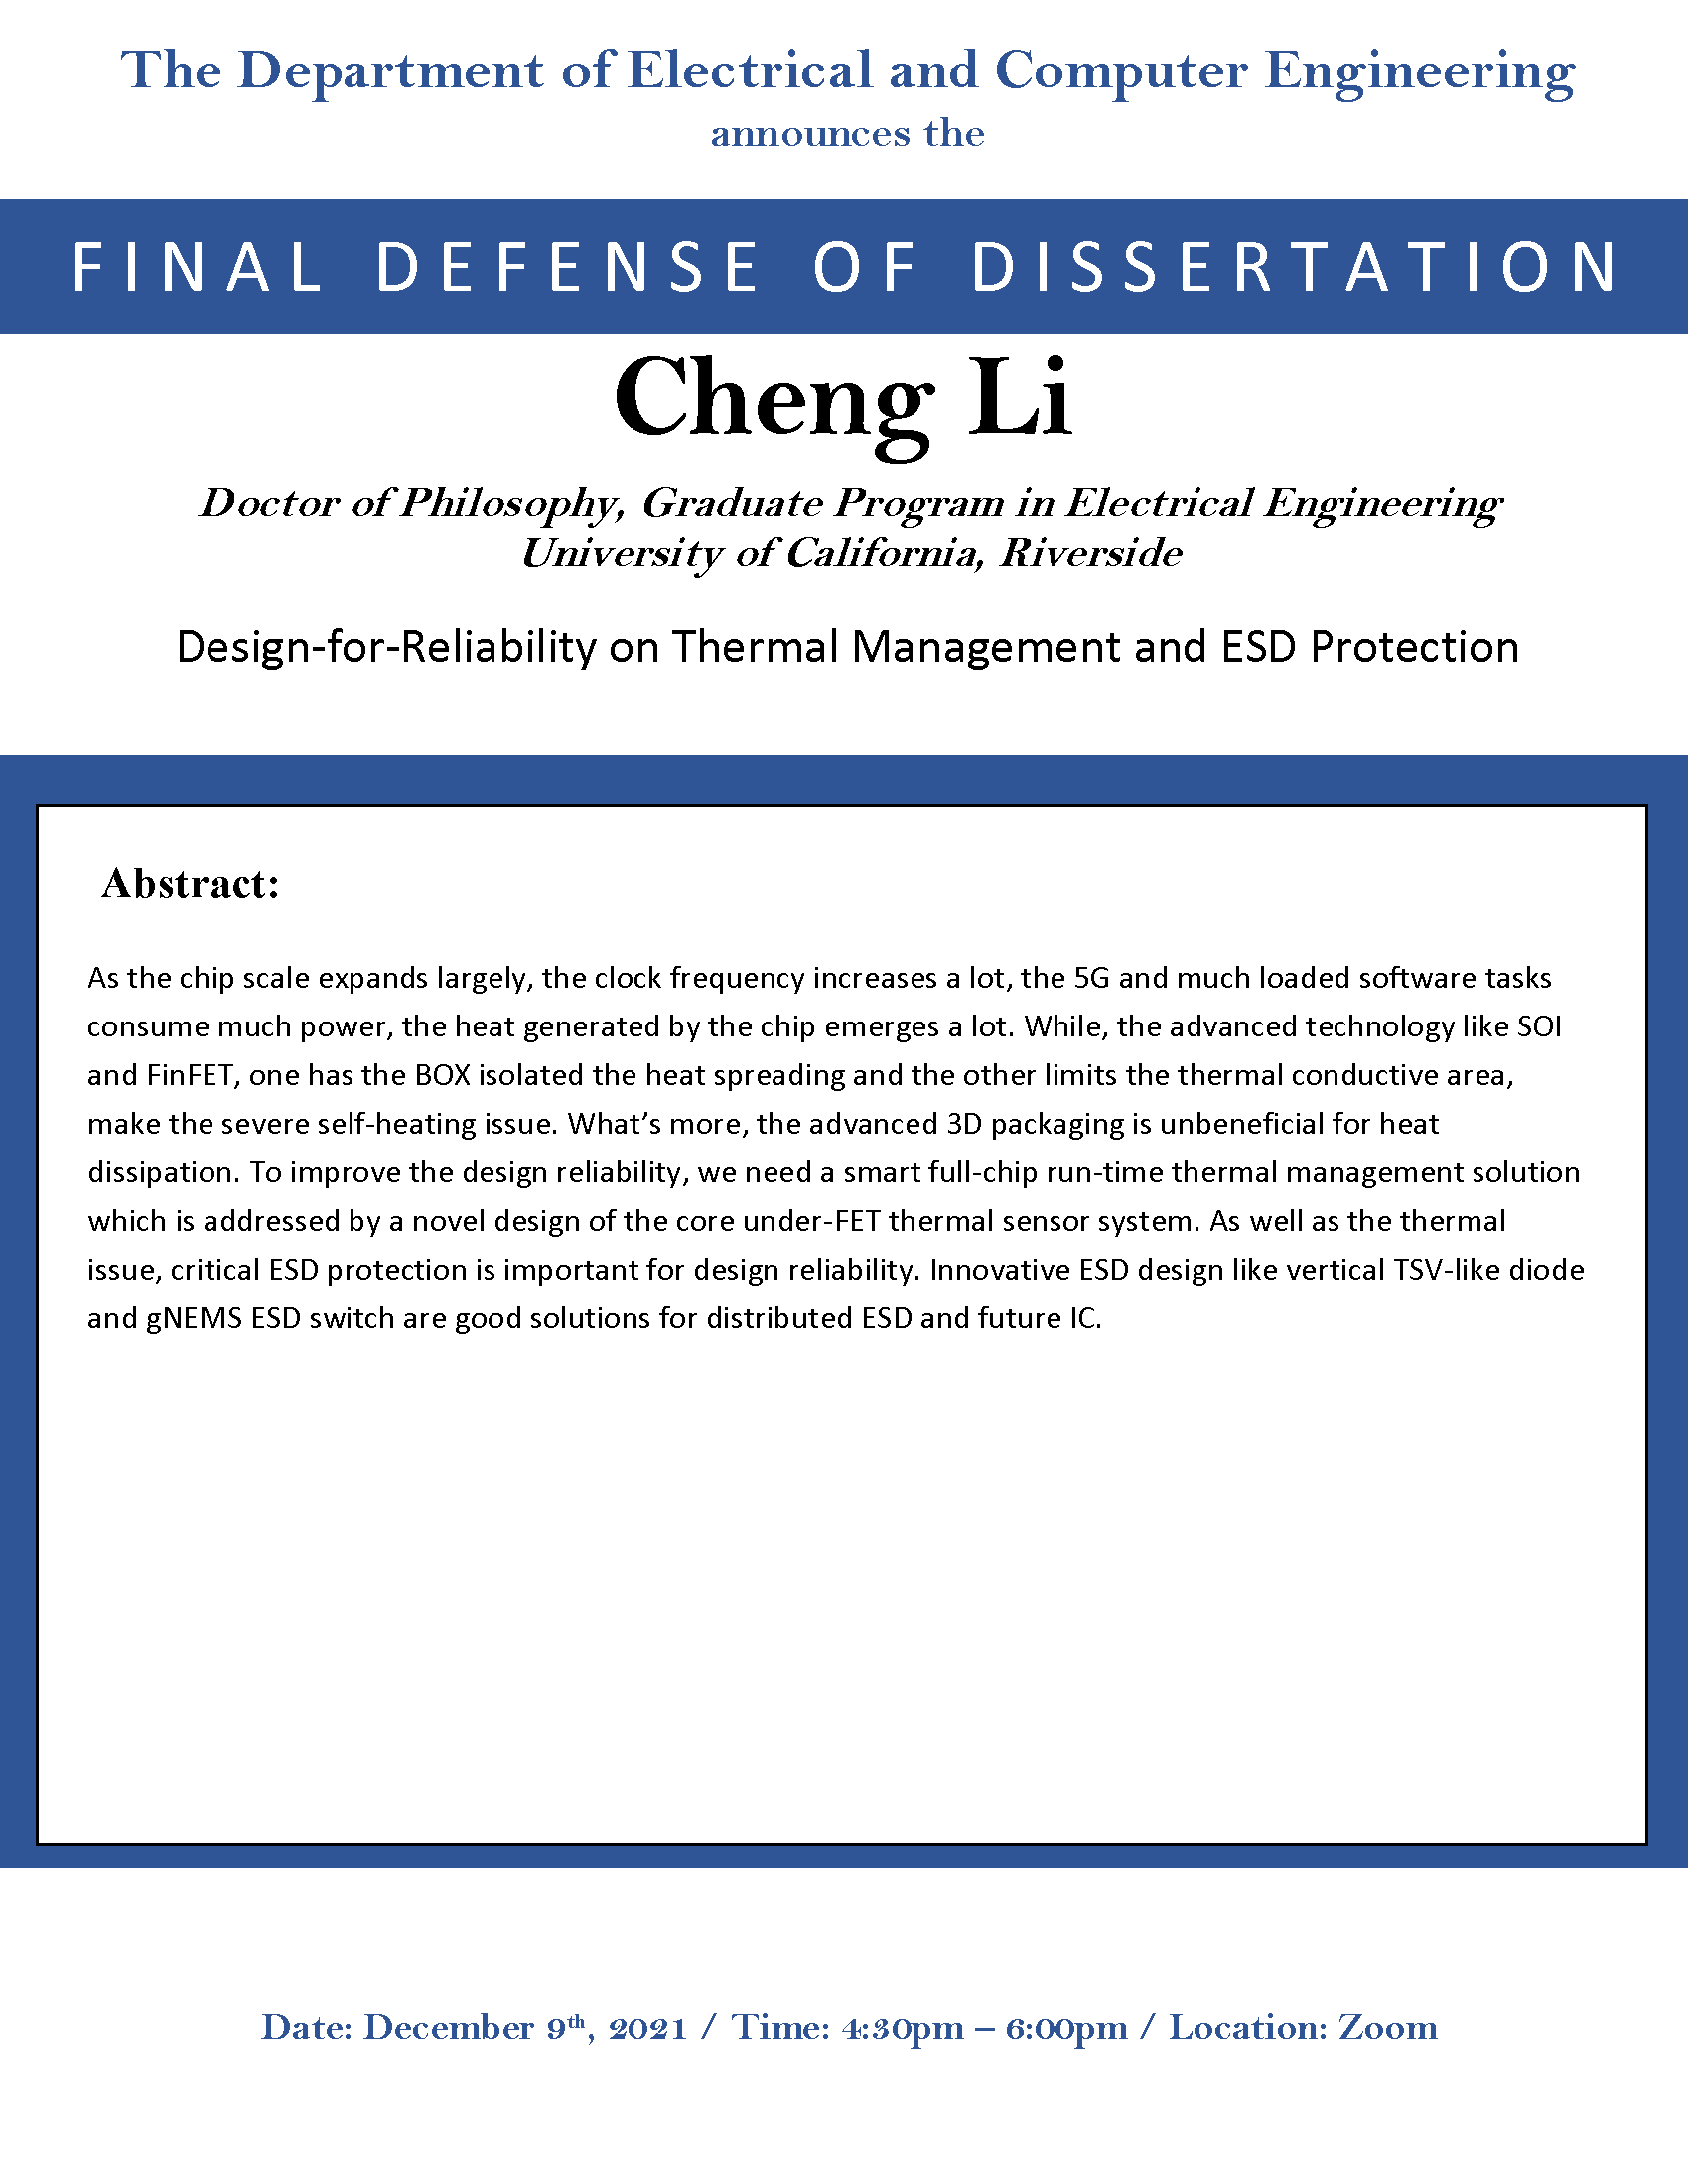 Cheng Li PhD Dissertation Flyer